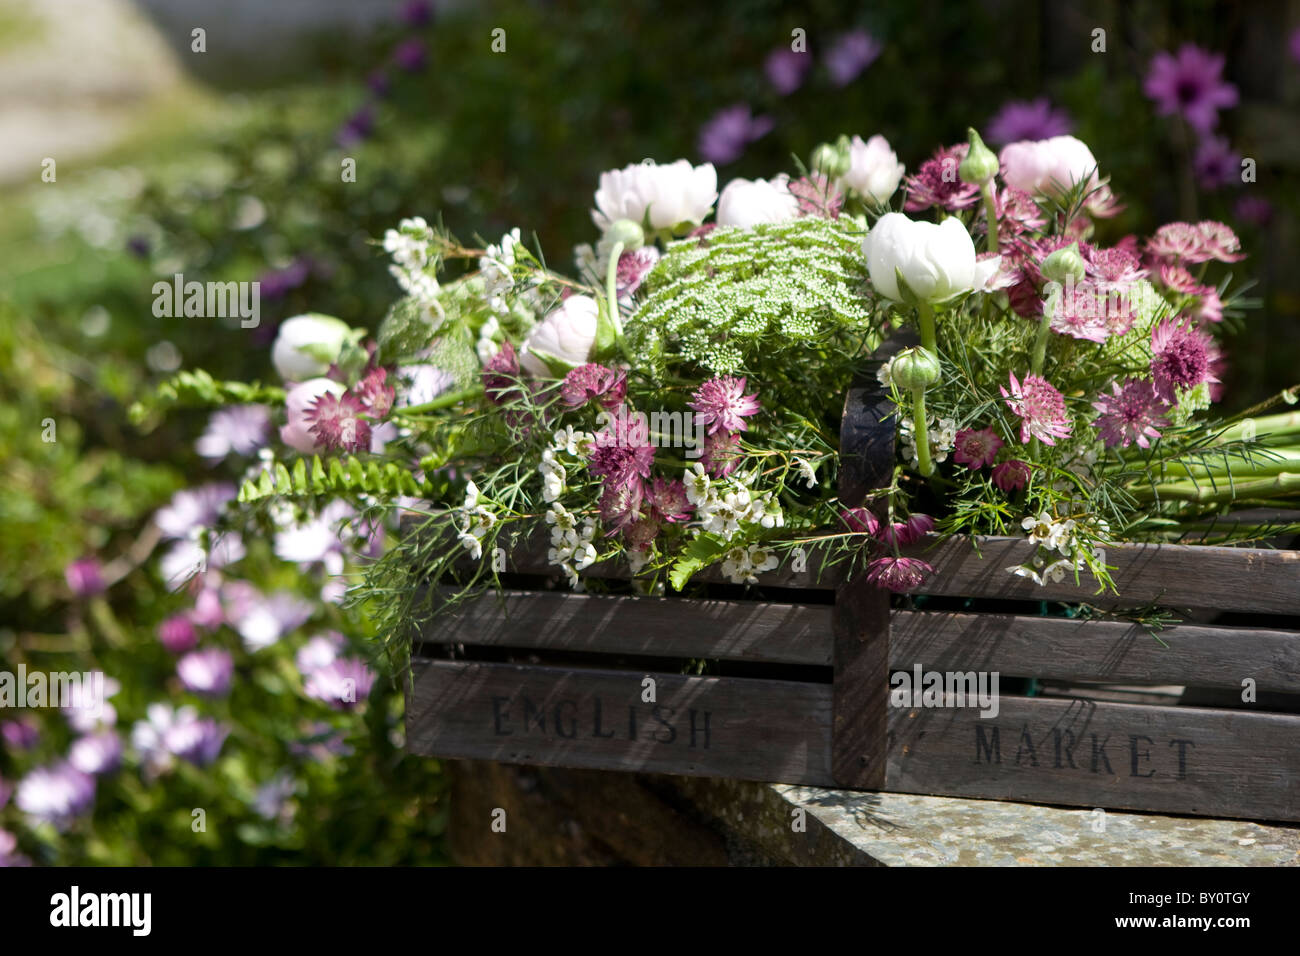 Un manojo de flores silvestres en un marcado punnett mercado inglés Foto de stock